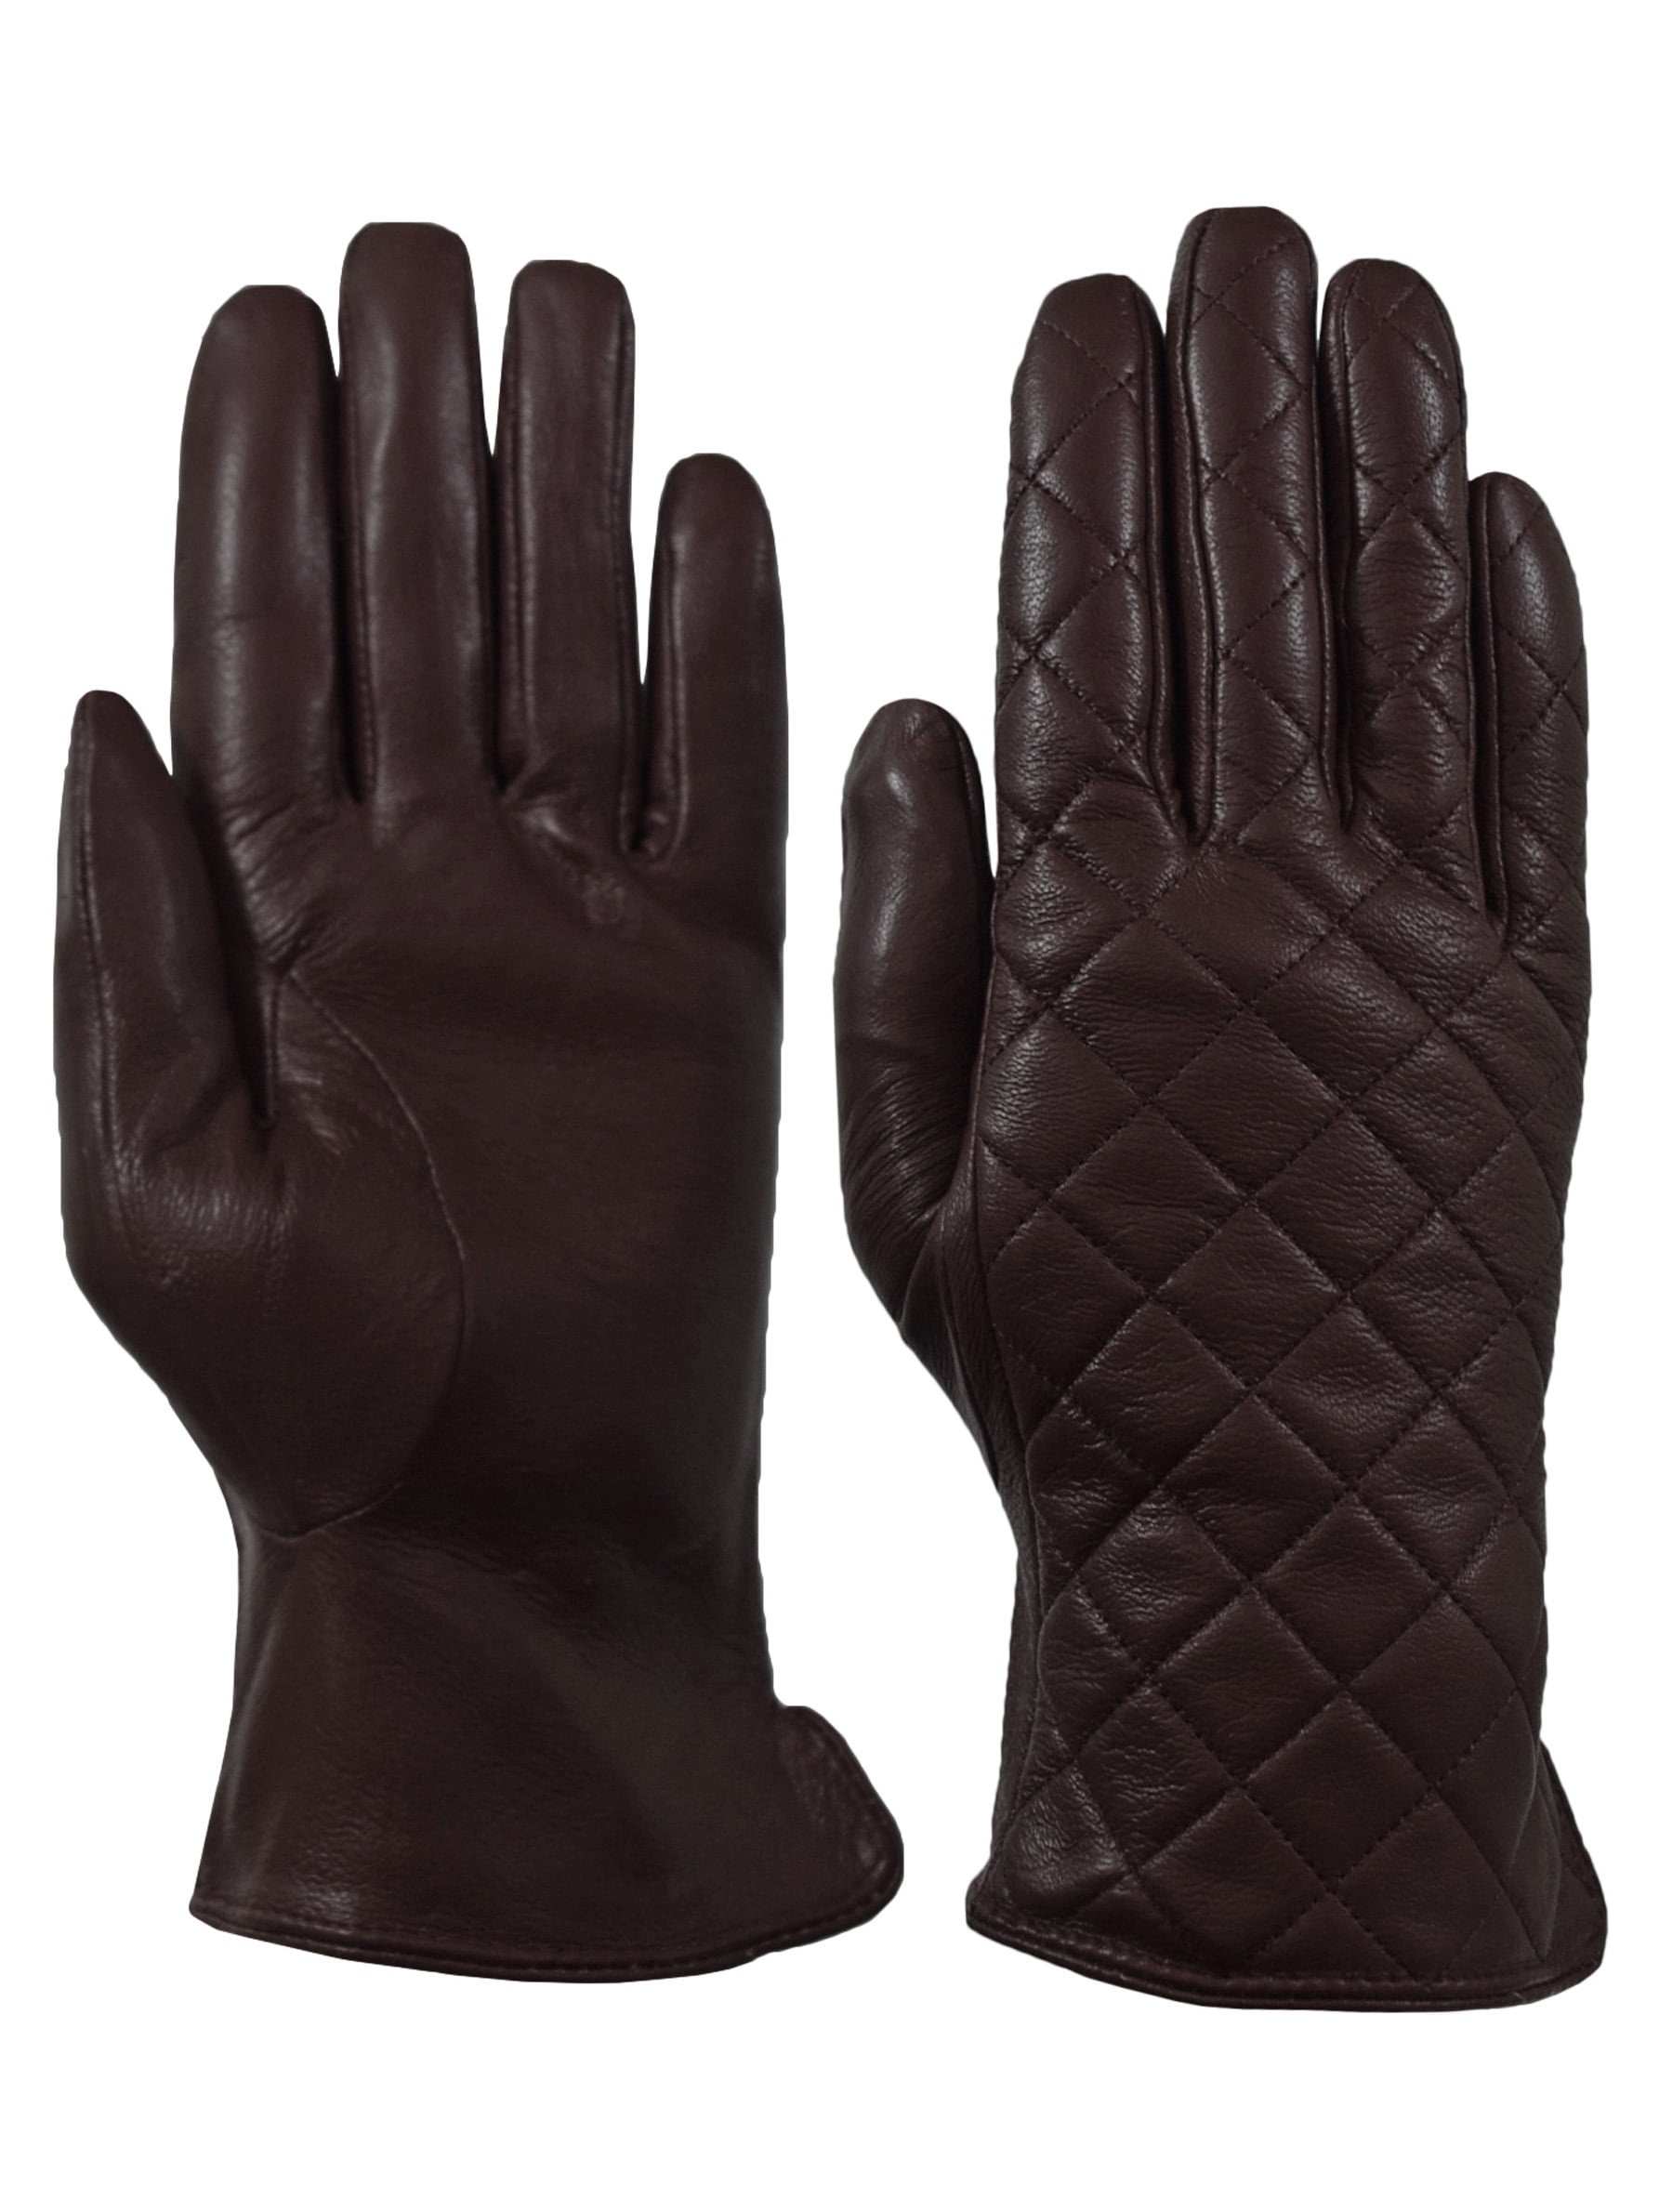 Woman's Gloves S Winter Ladies' Dress Gloves #18N Leather Gloves Hand Warmer 